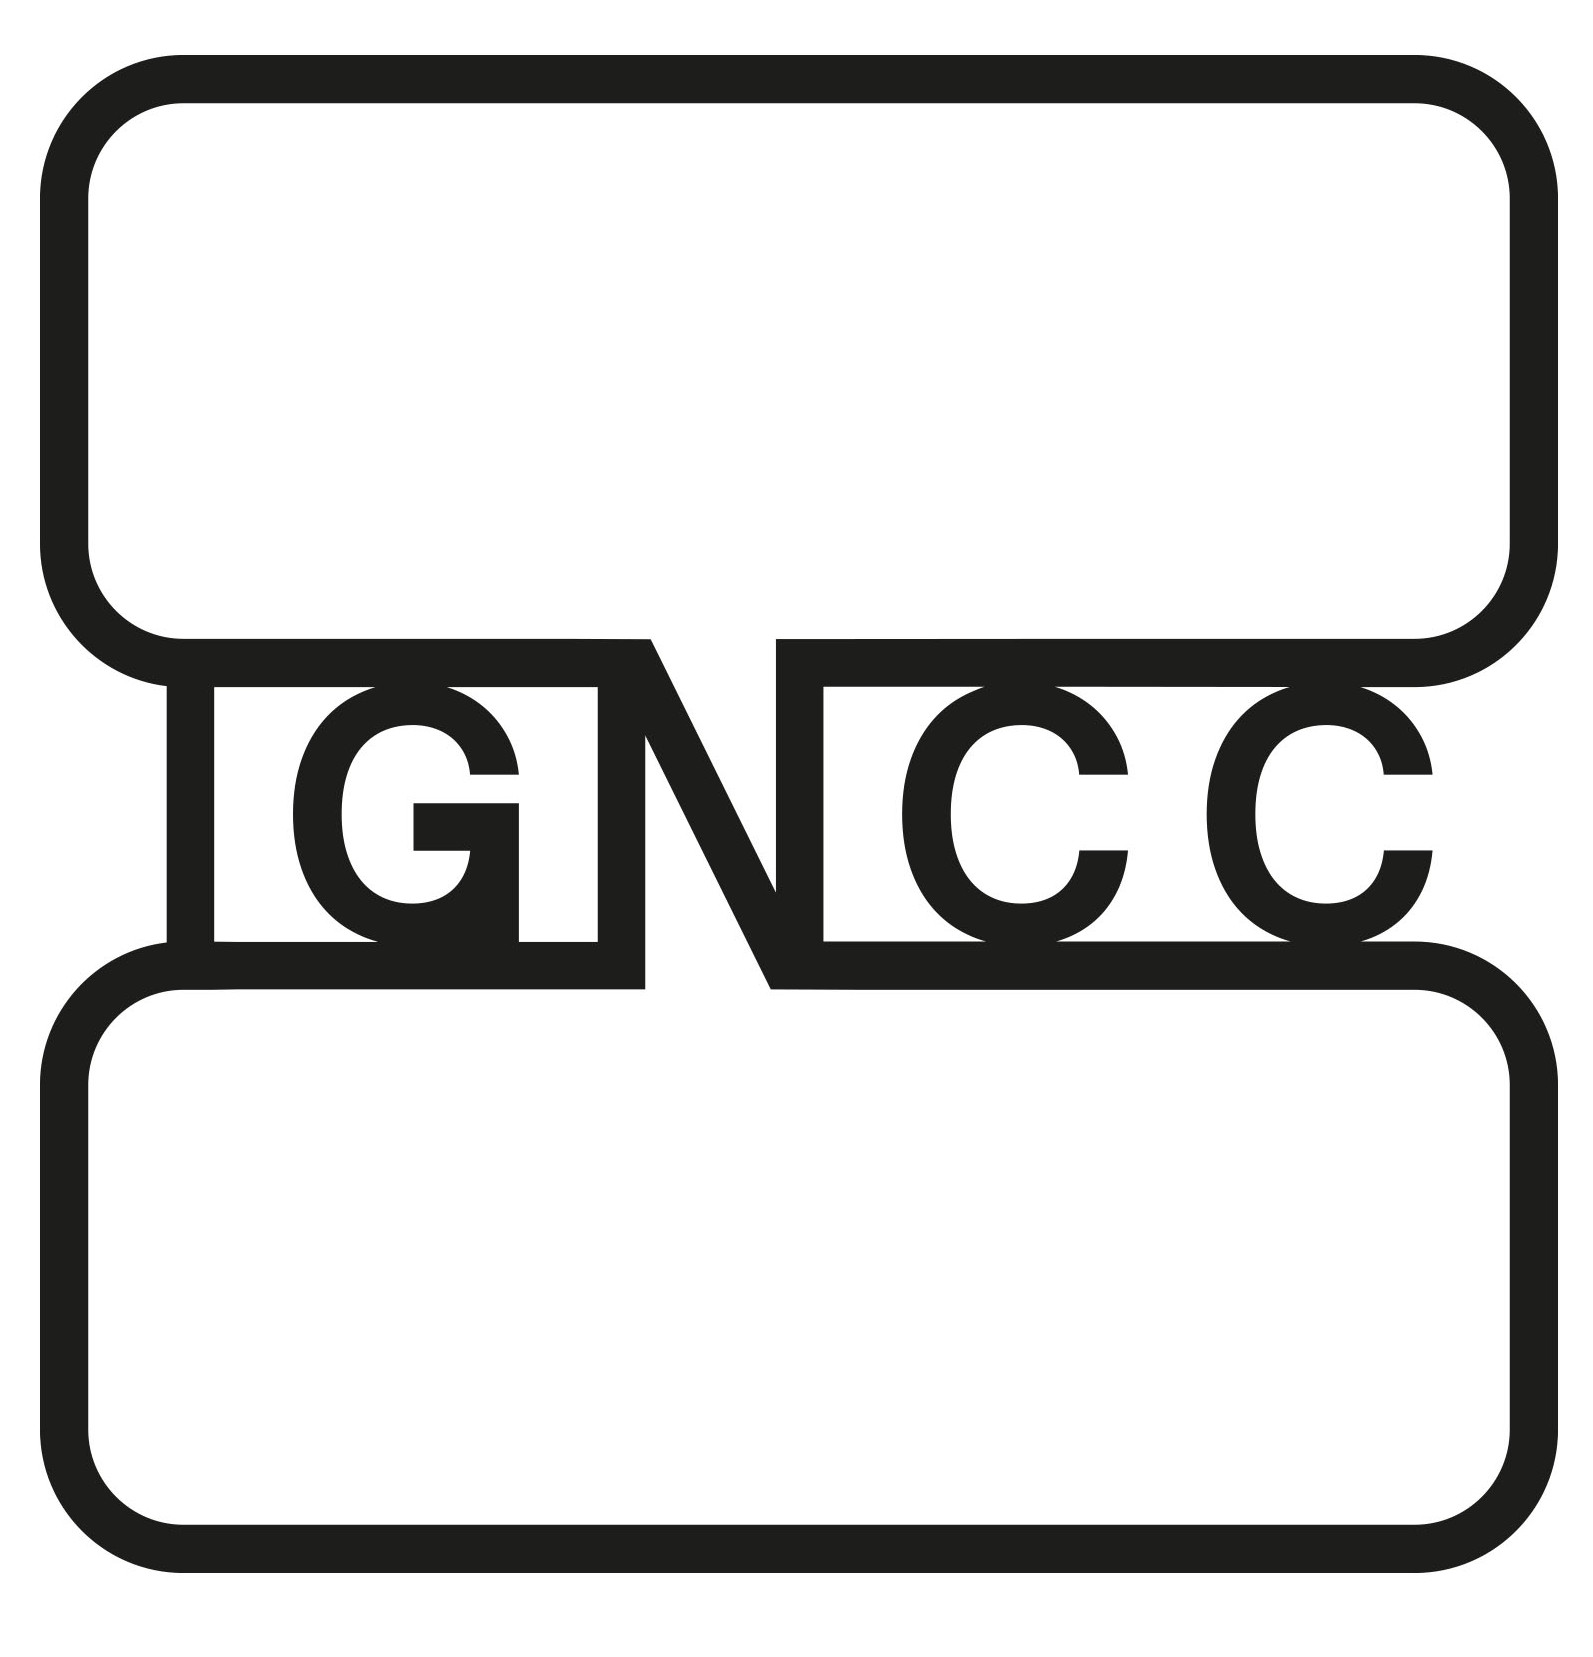 IGNCC logo